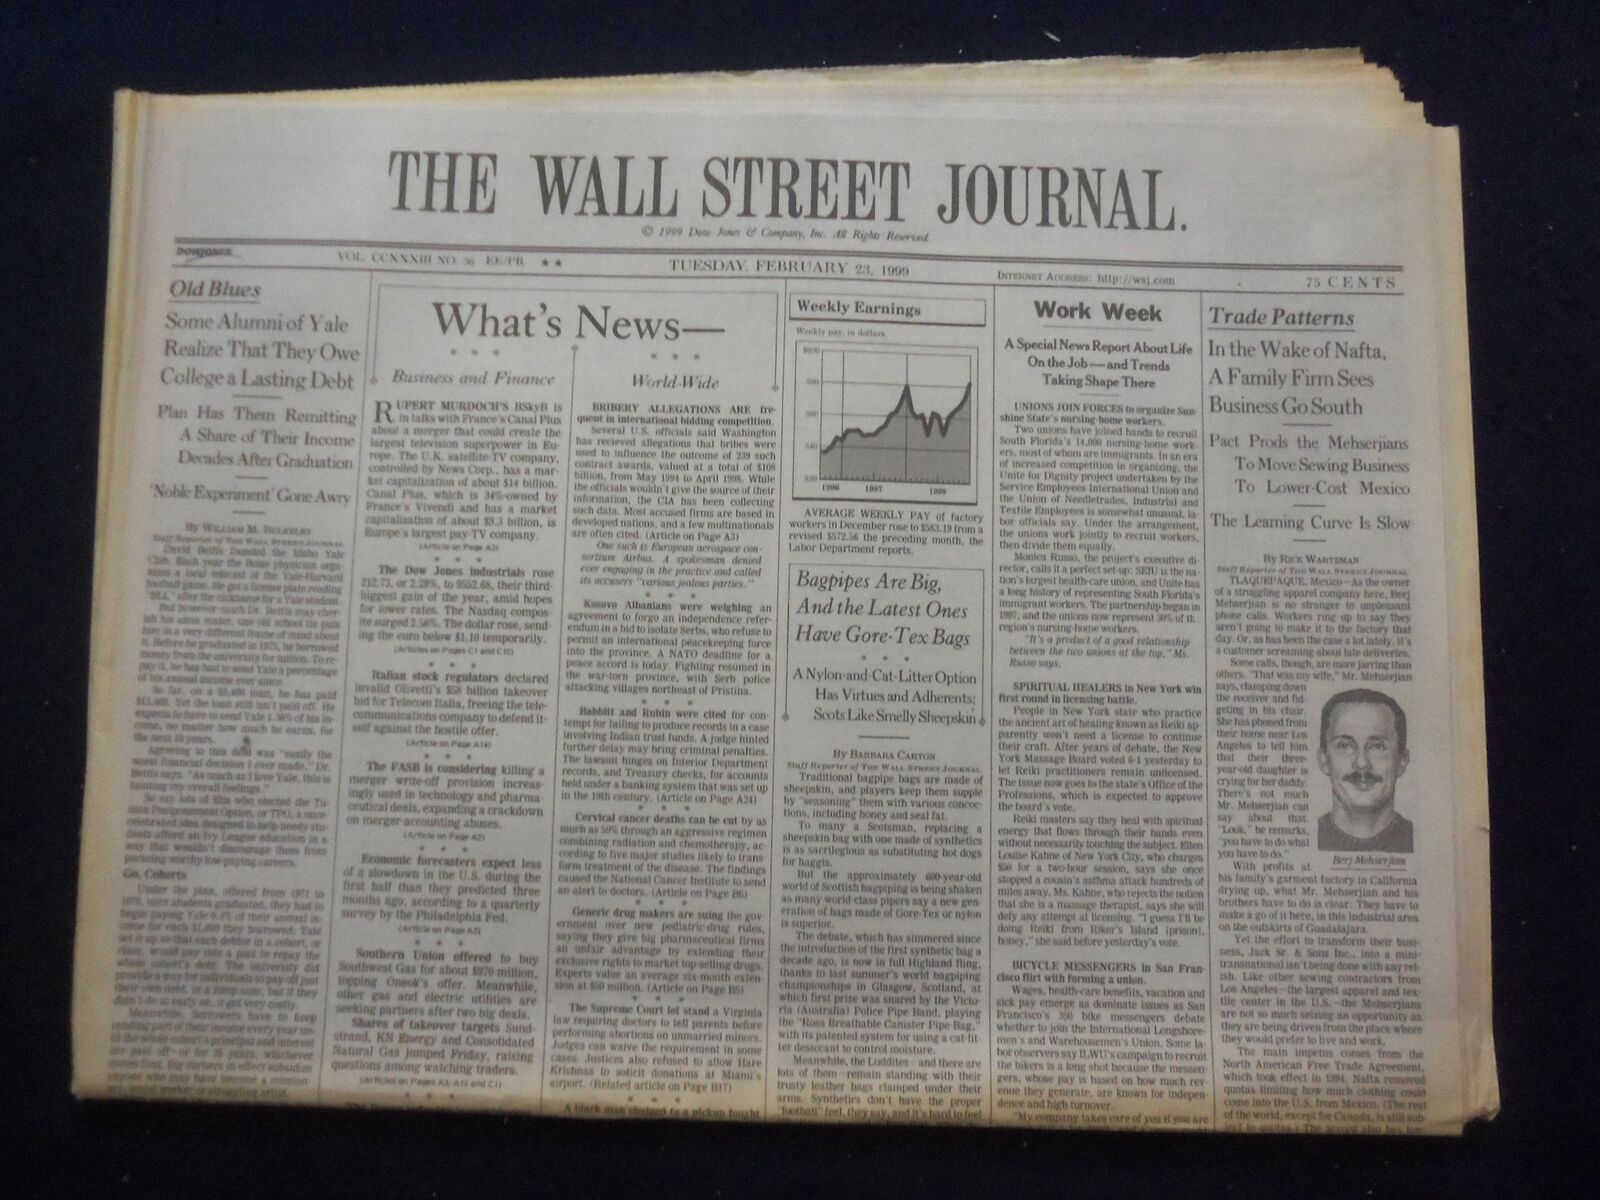 1999 FEB 23 THE WALL STREET JOURNAL -WAKE OF NAFTA, BUSINESS GOES SOUTH - WJ 335